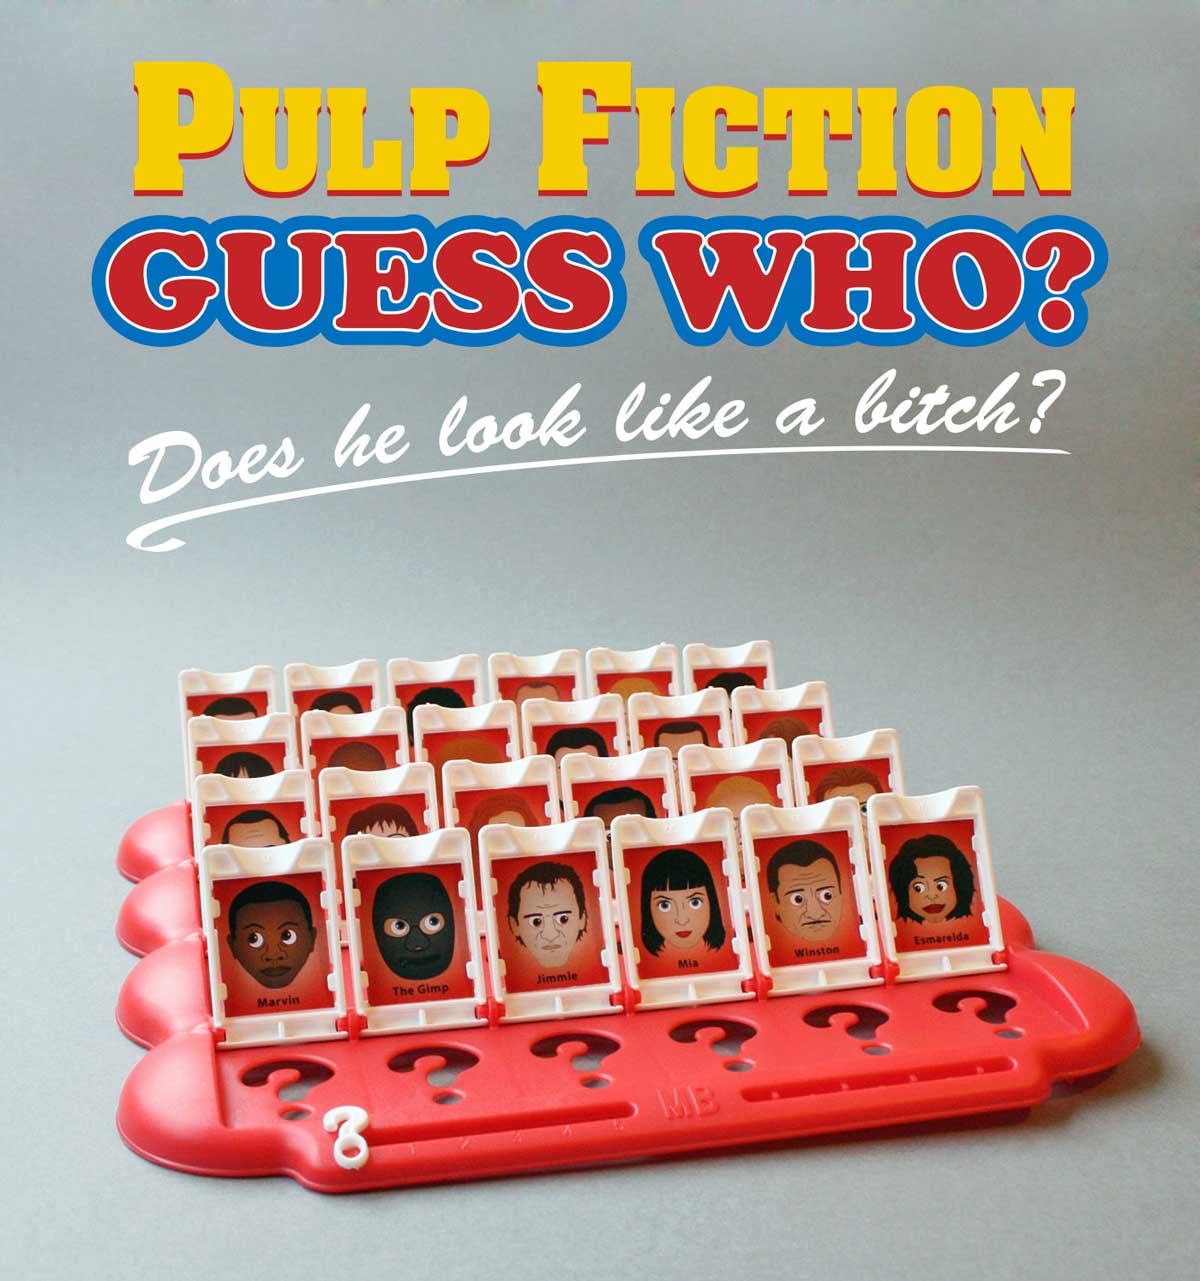 Pulp Fiction Guess Who by Joe Stone